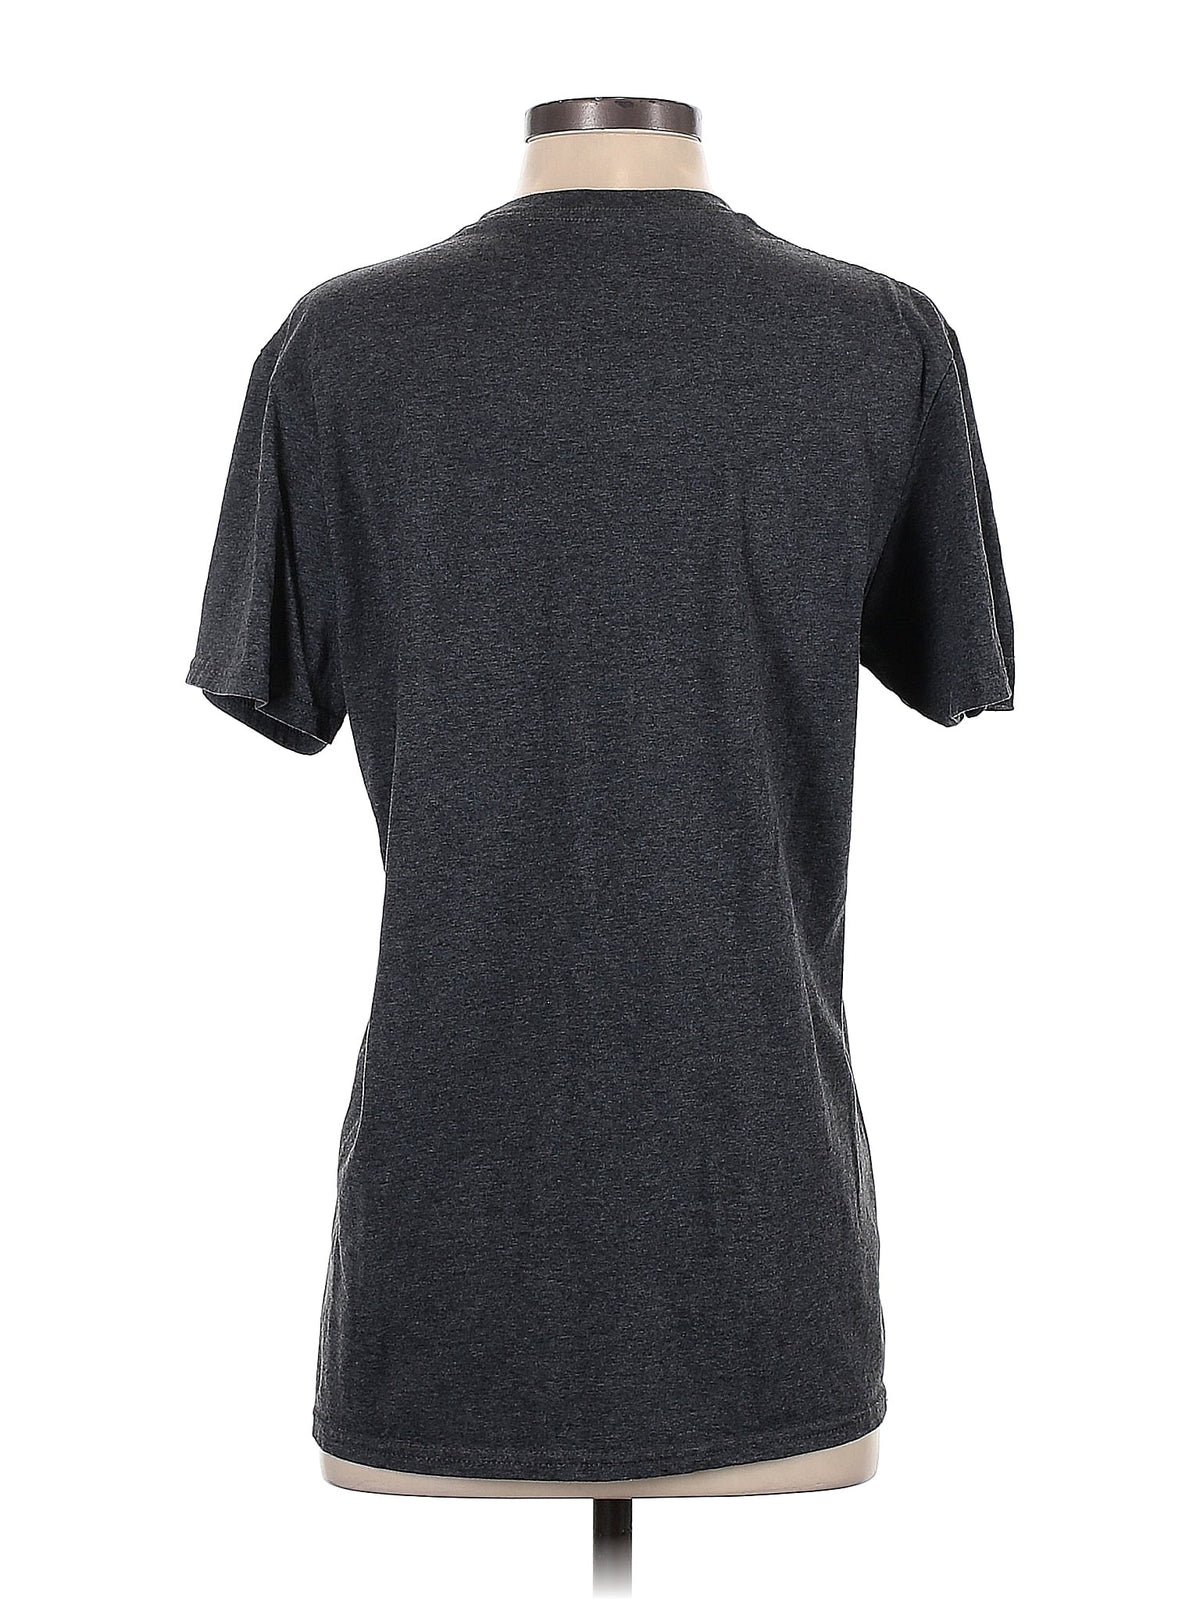 Long Sleeve T Shirt size - M